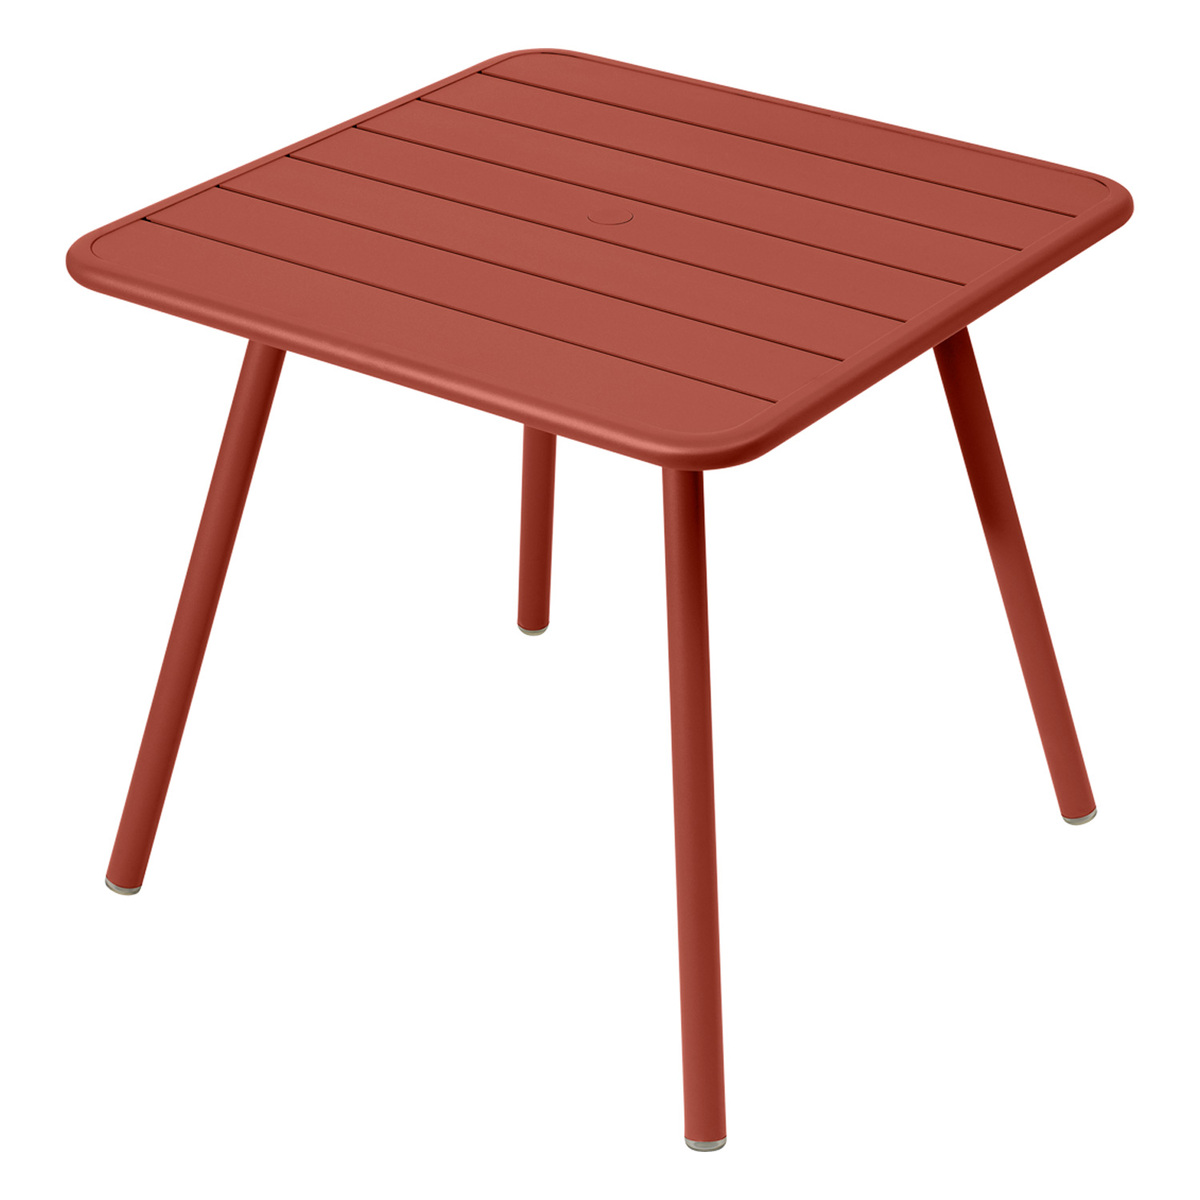 Fermob Luxembourg pöytä, 80 x 80 cm, red ochre